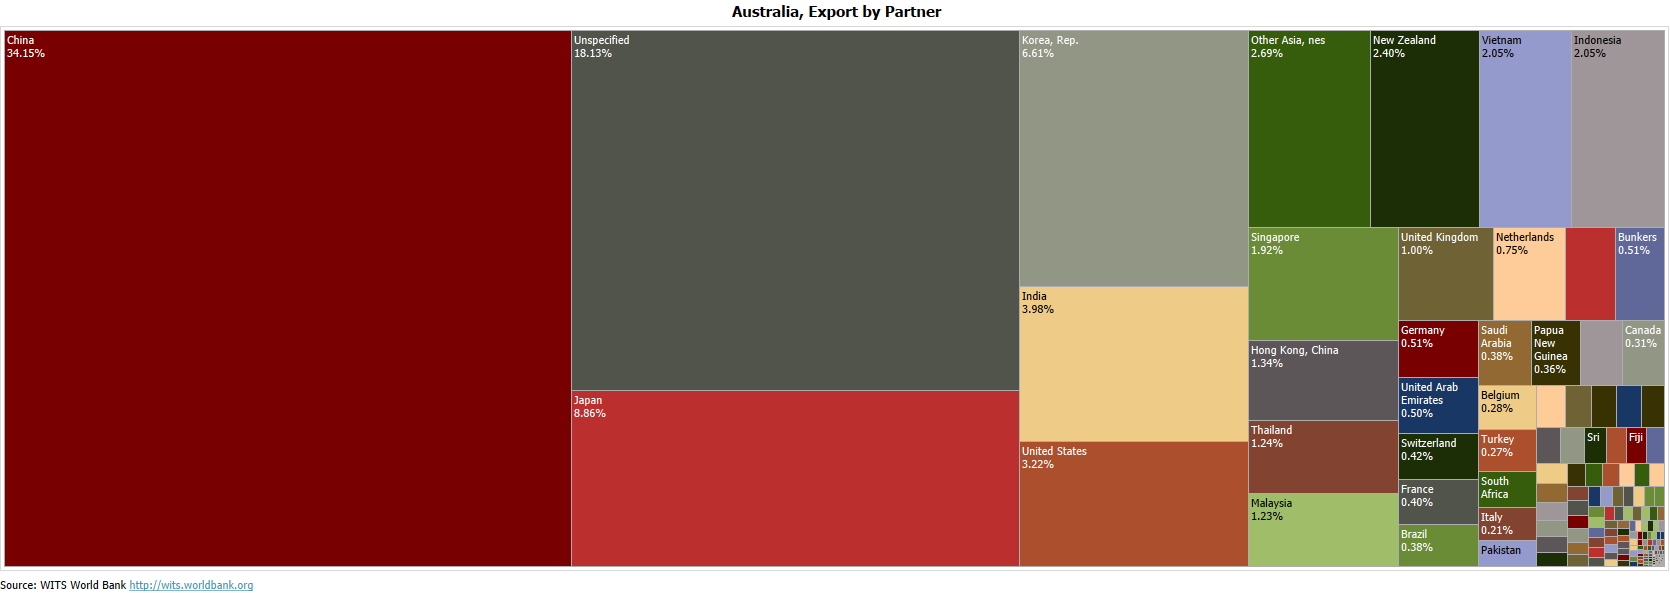 australia export partners